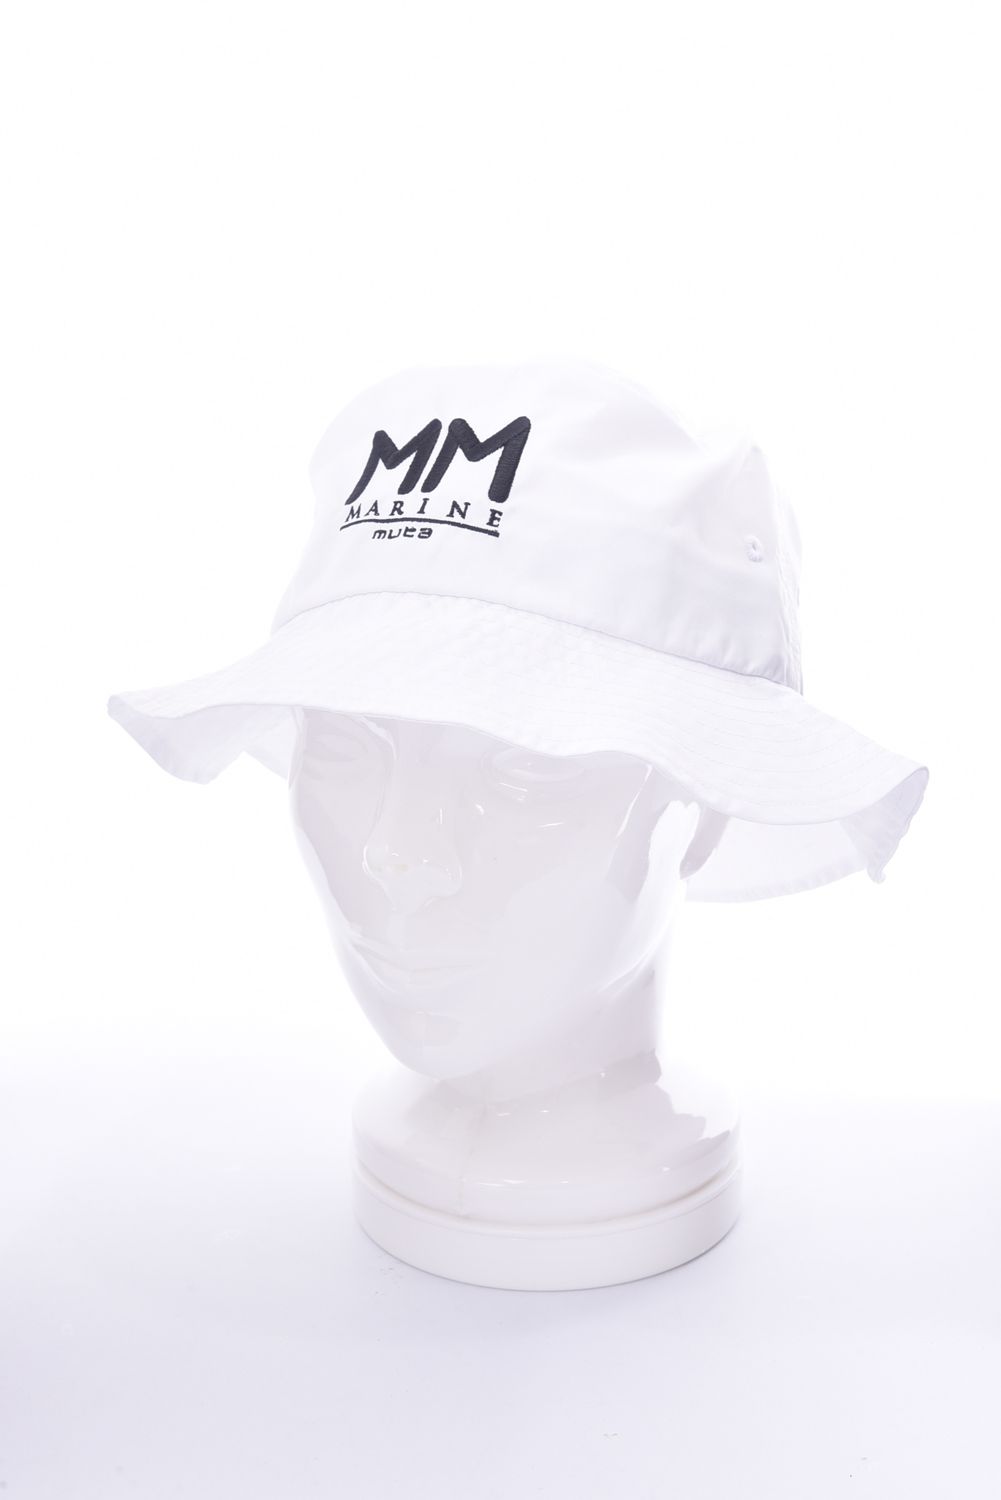 muta - 【GOSSIP GOLF限定商品】 MM EMBROIDERY BUCKET HAT / 別注 MM